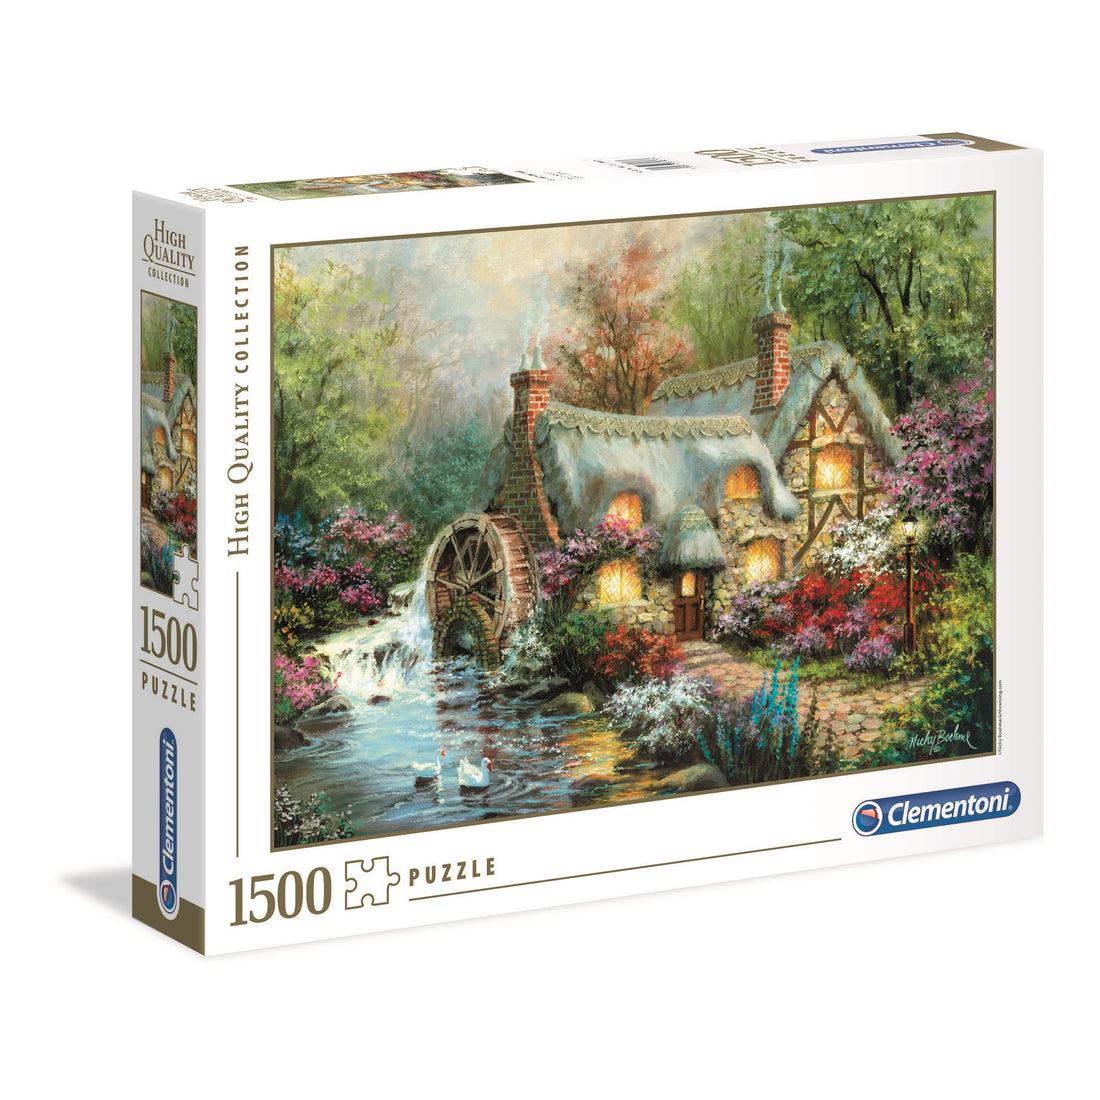 Puzzles - 1500 piece